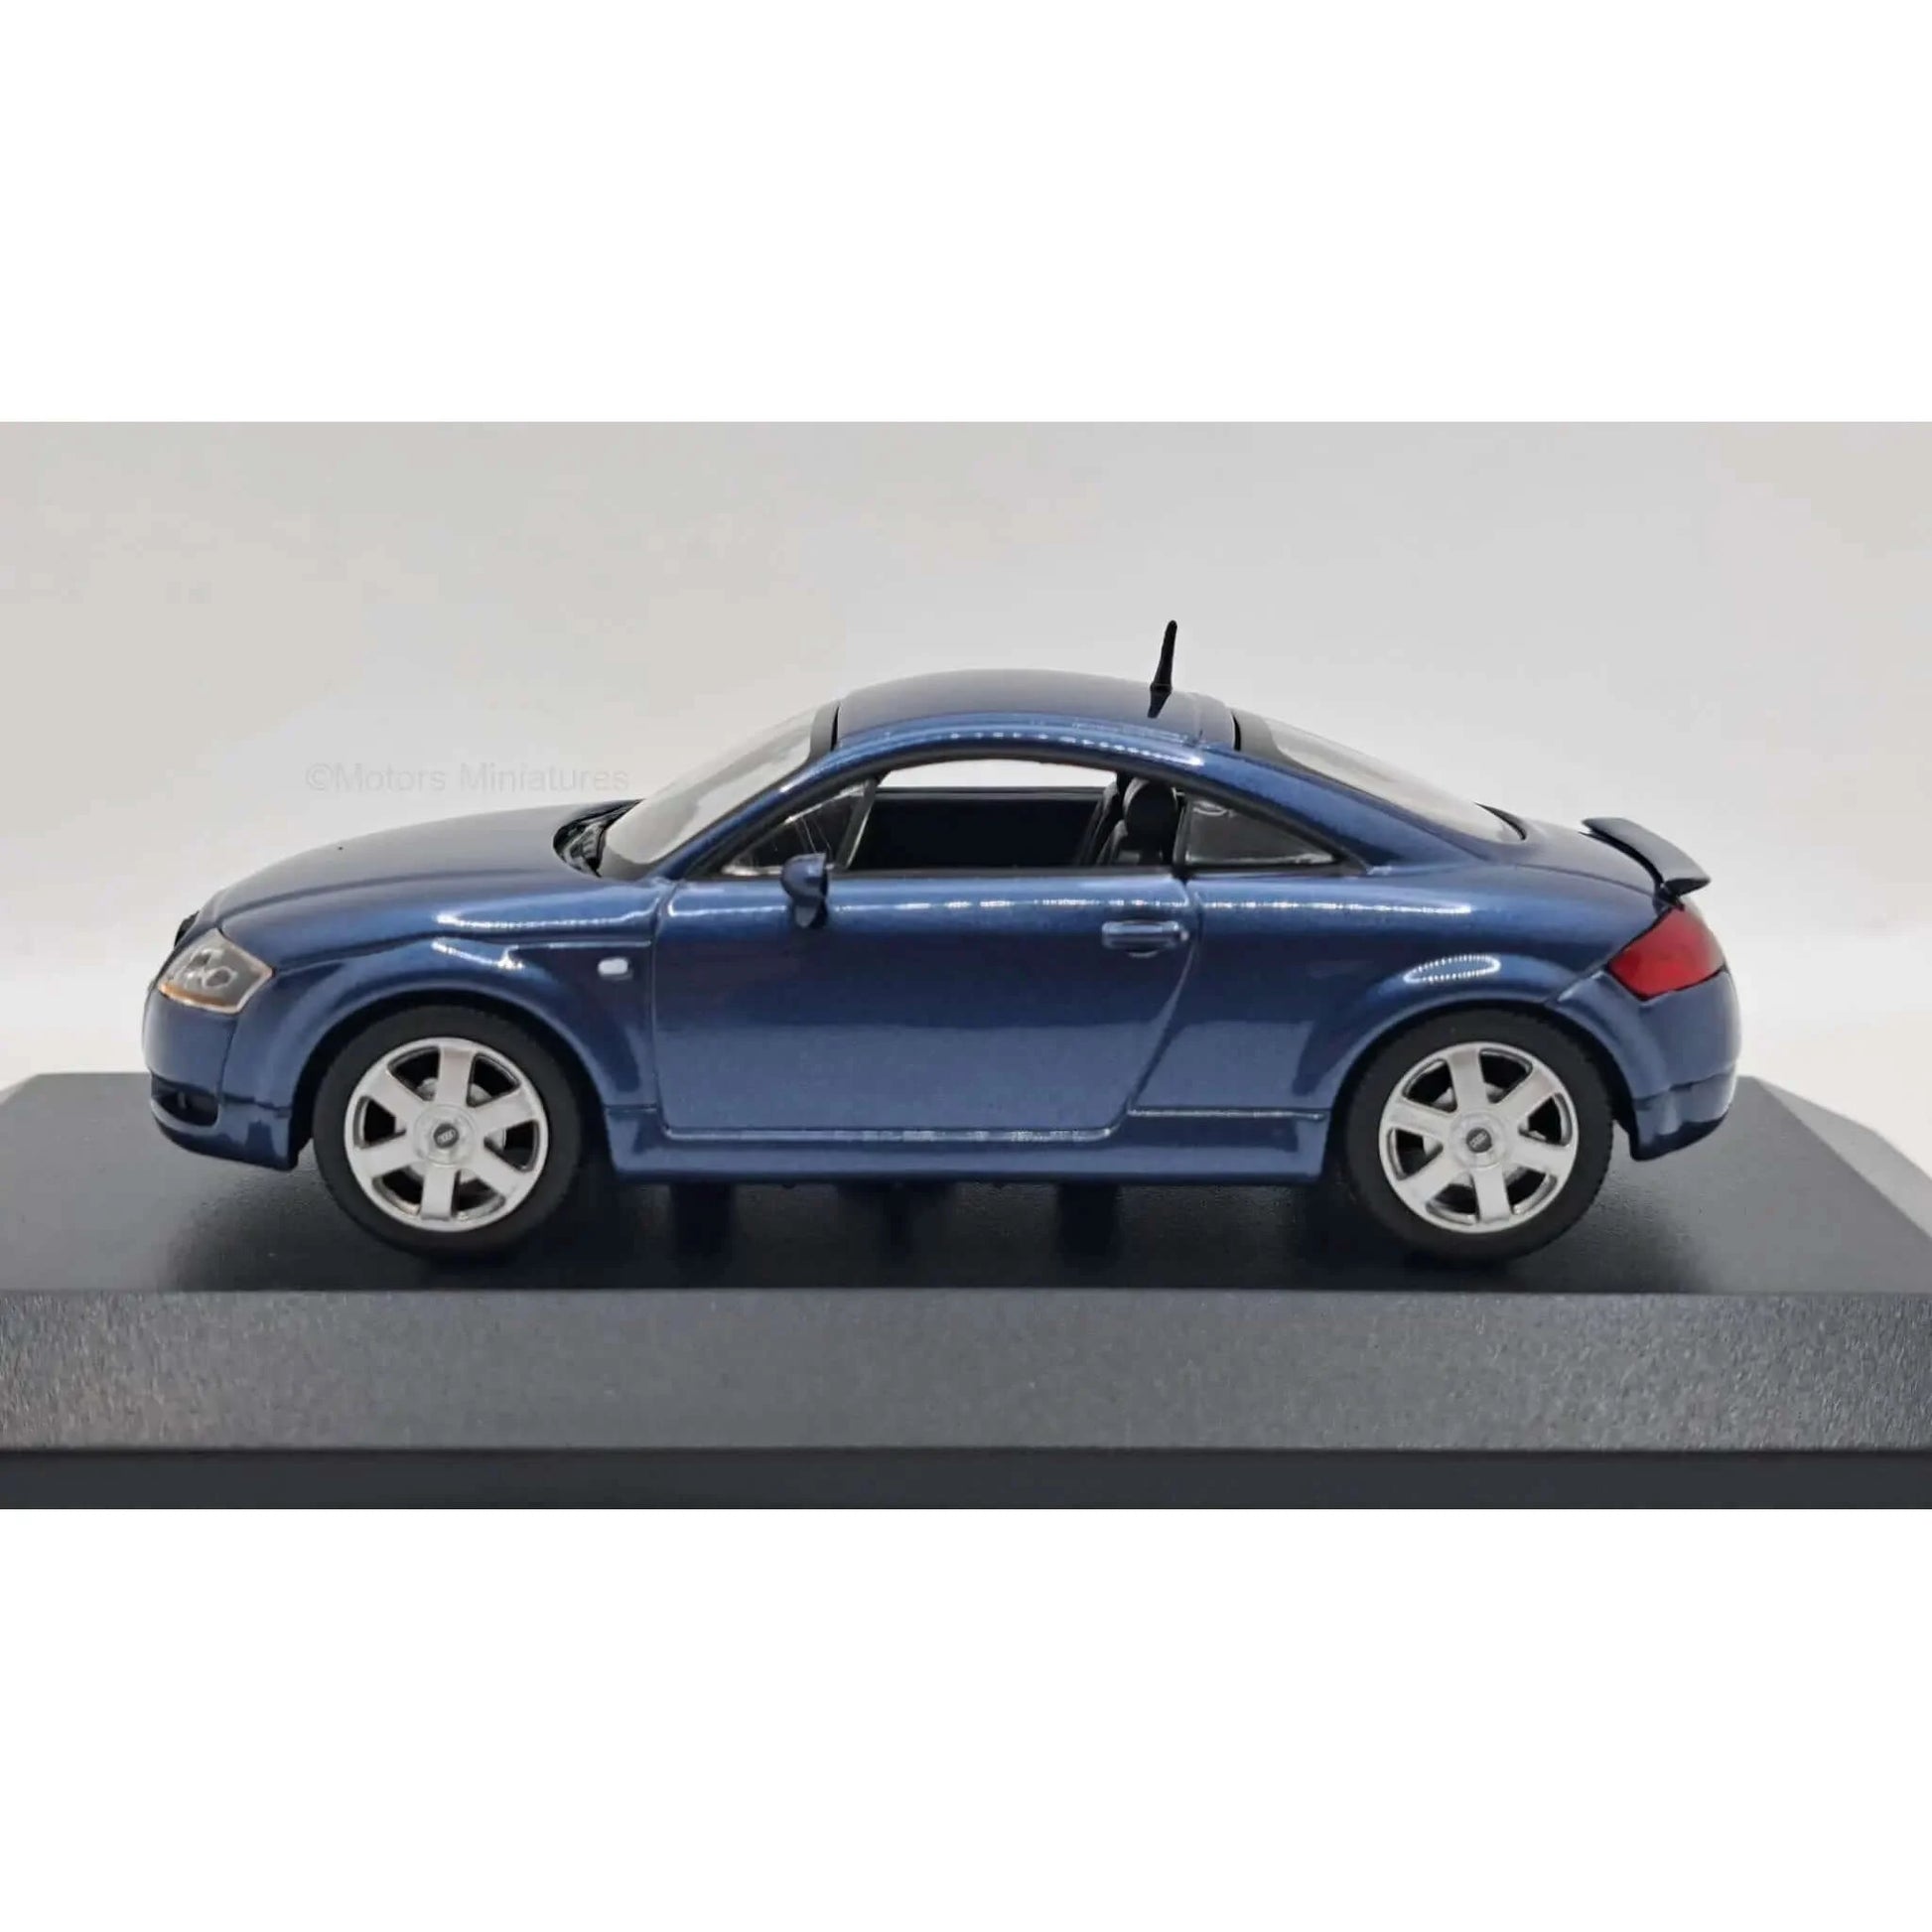 Audi TT Coupe bleu métallisé Maxichamps 1/43 | Motors Miniatures